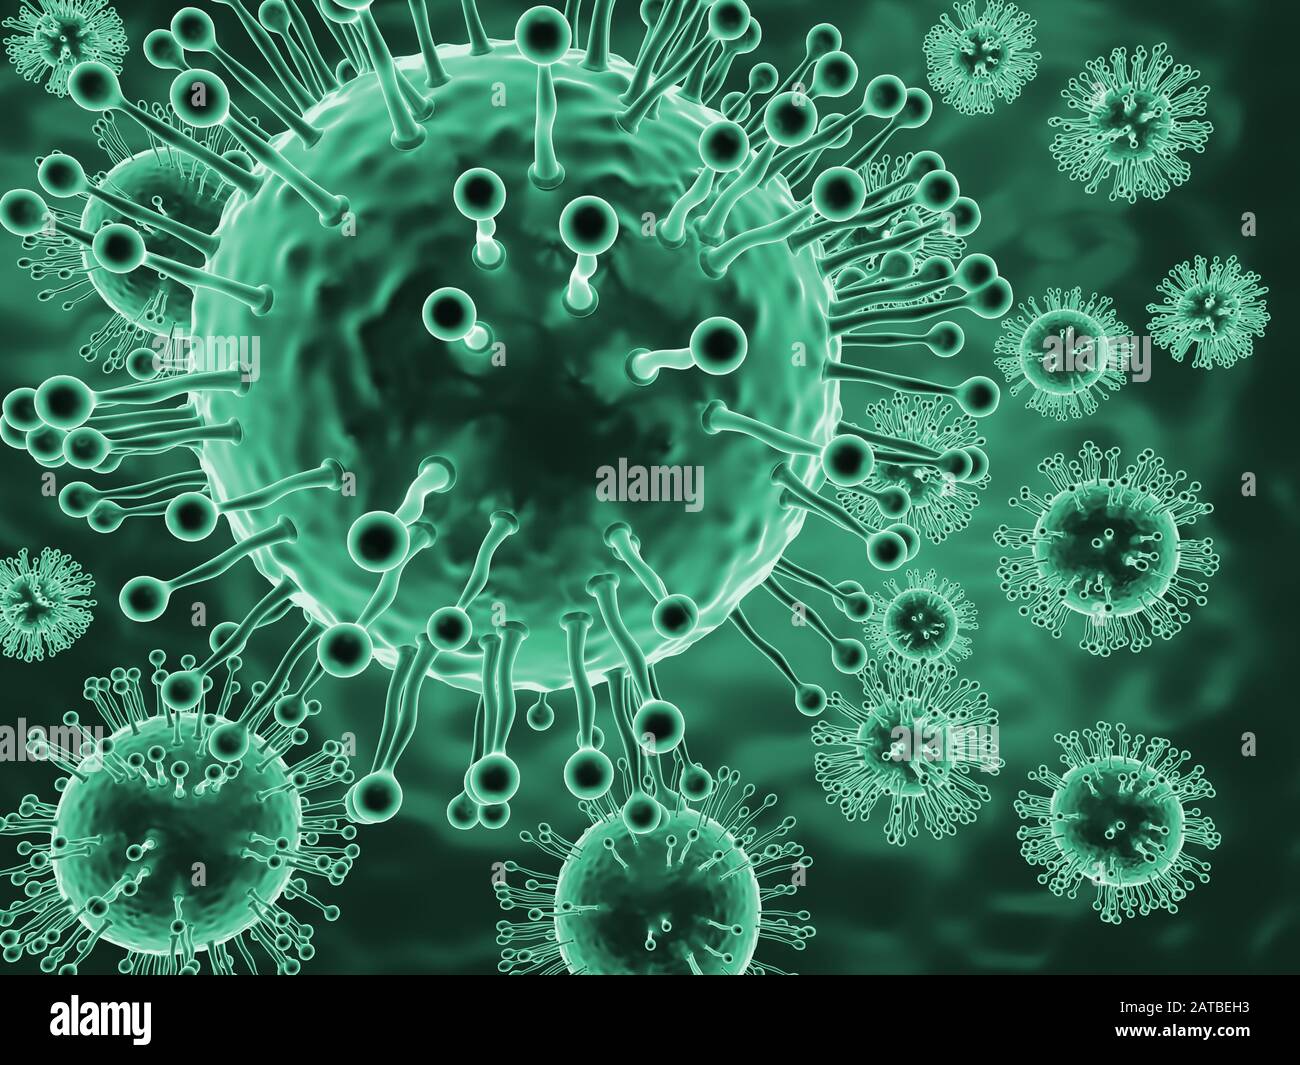 Microscopic image of deadly coronavirus particles Stock Photo